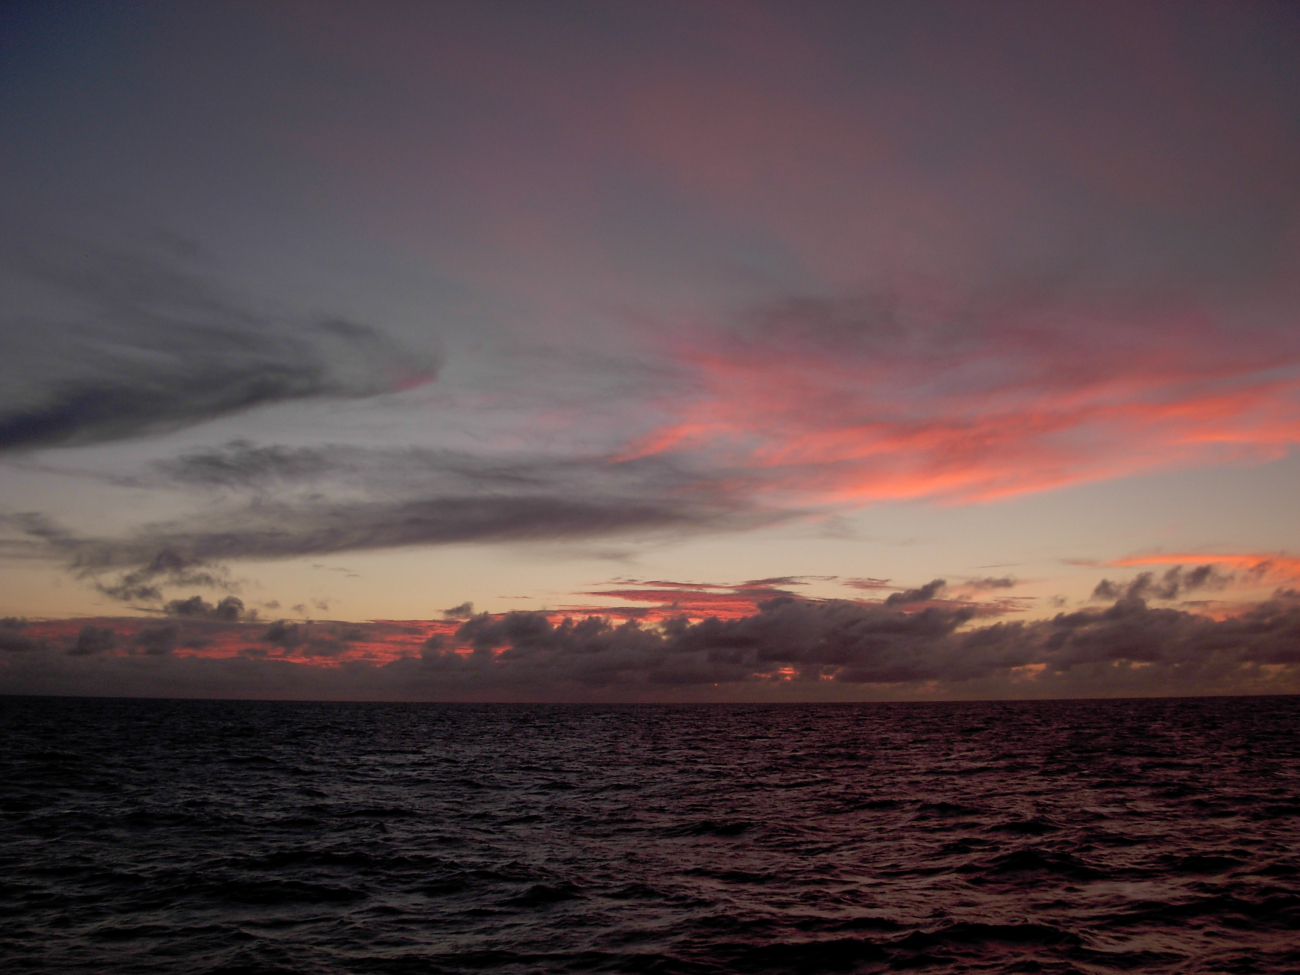 Tropical sunset at sea